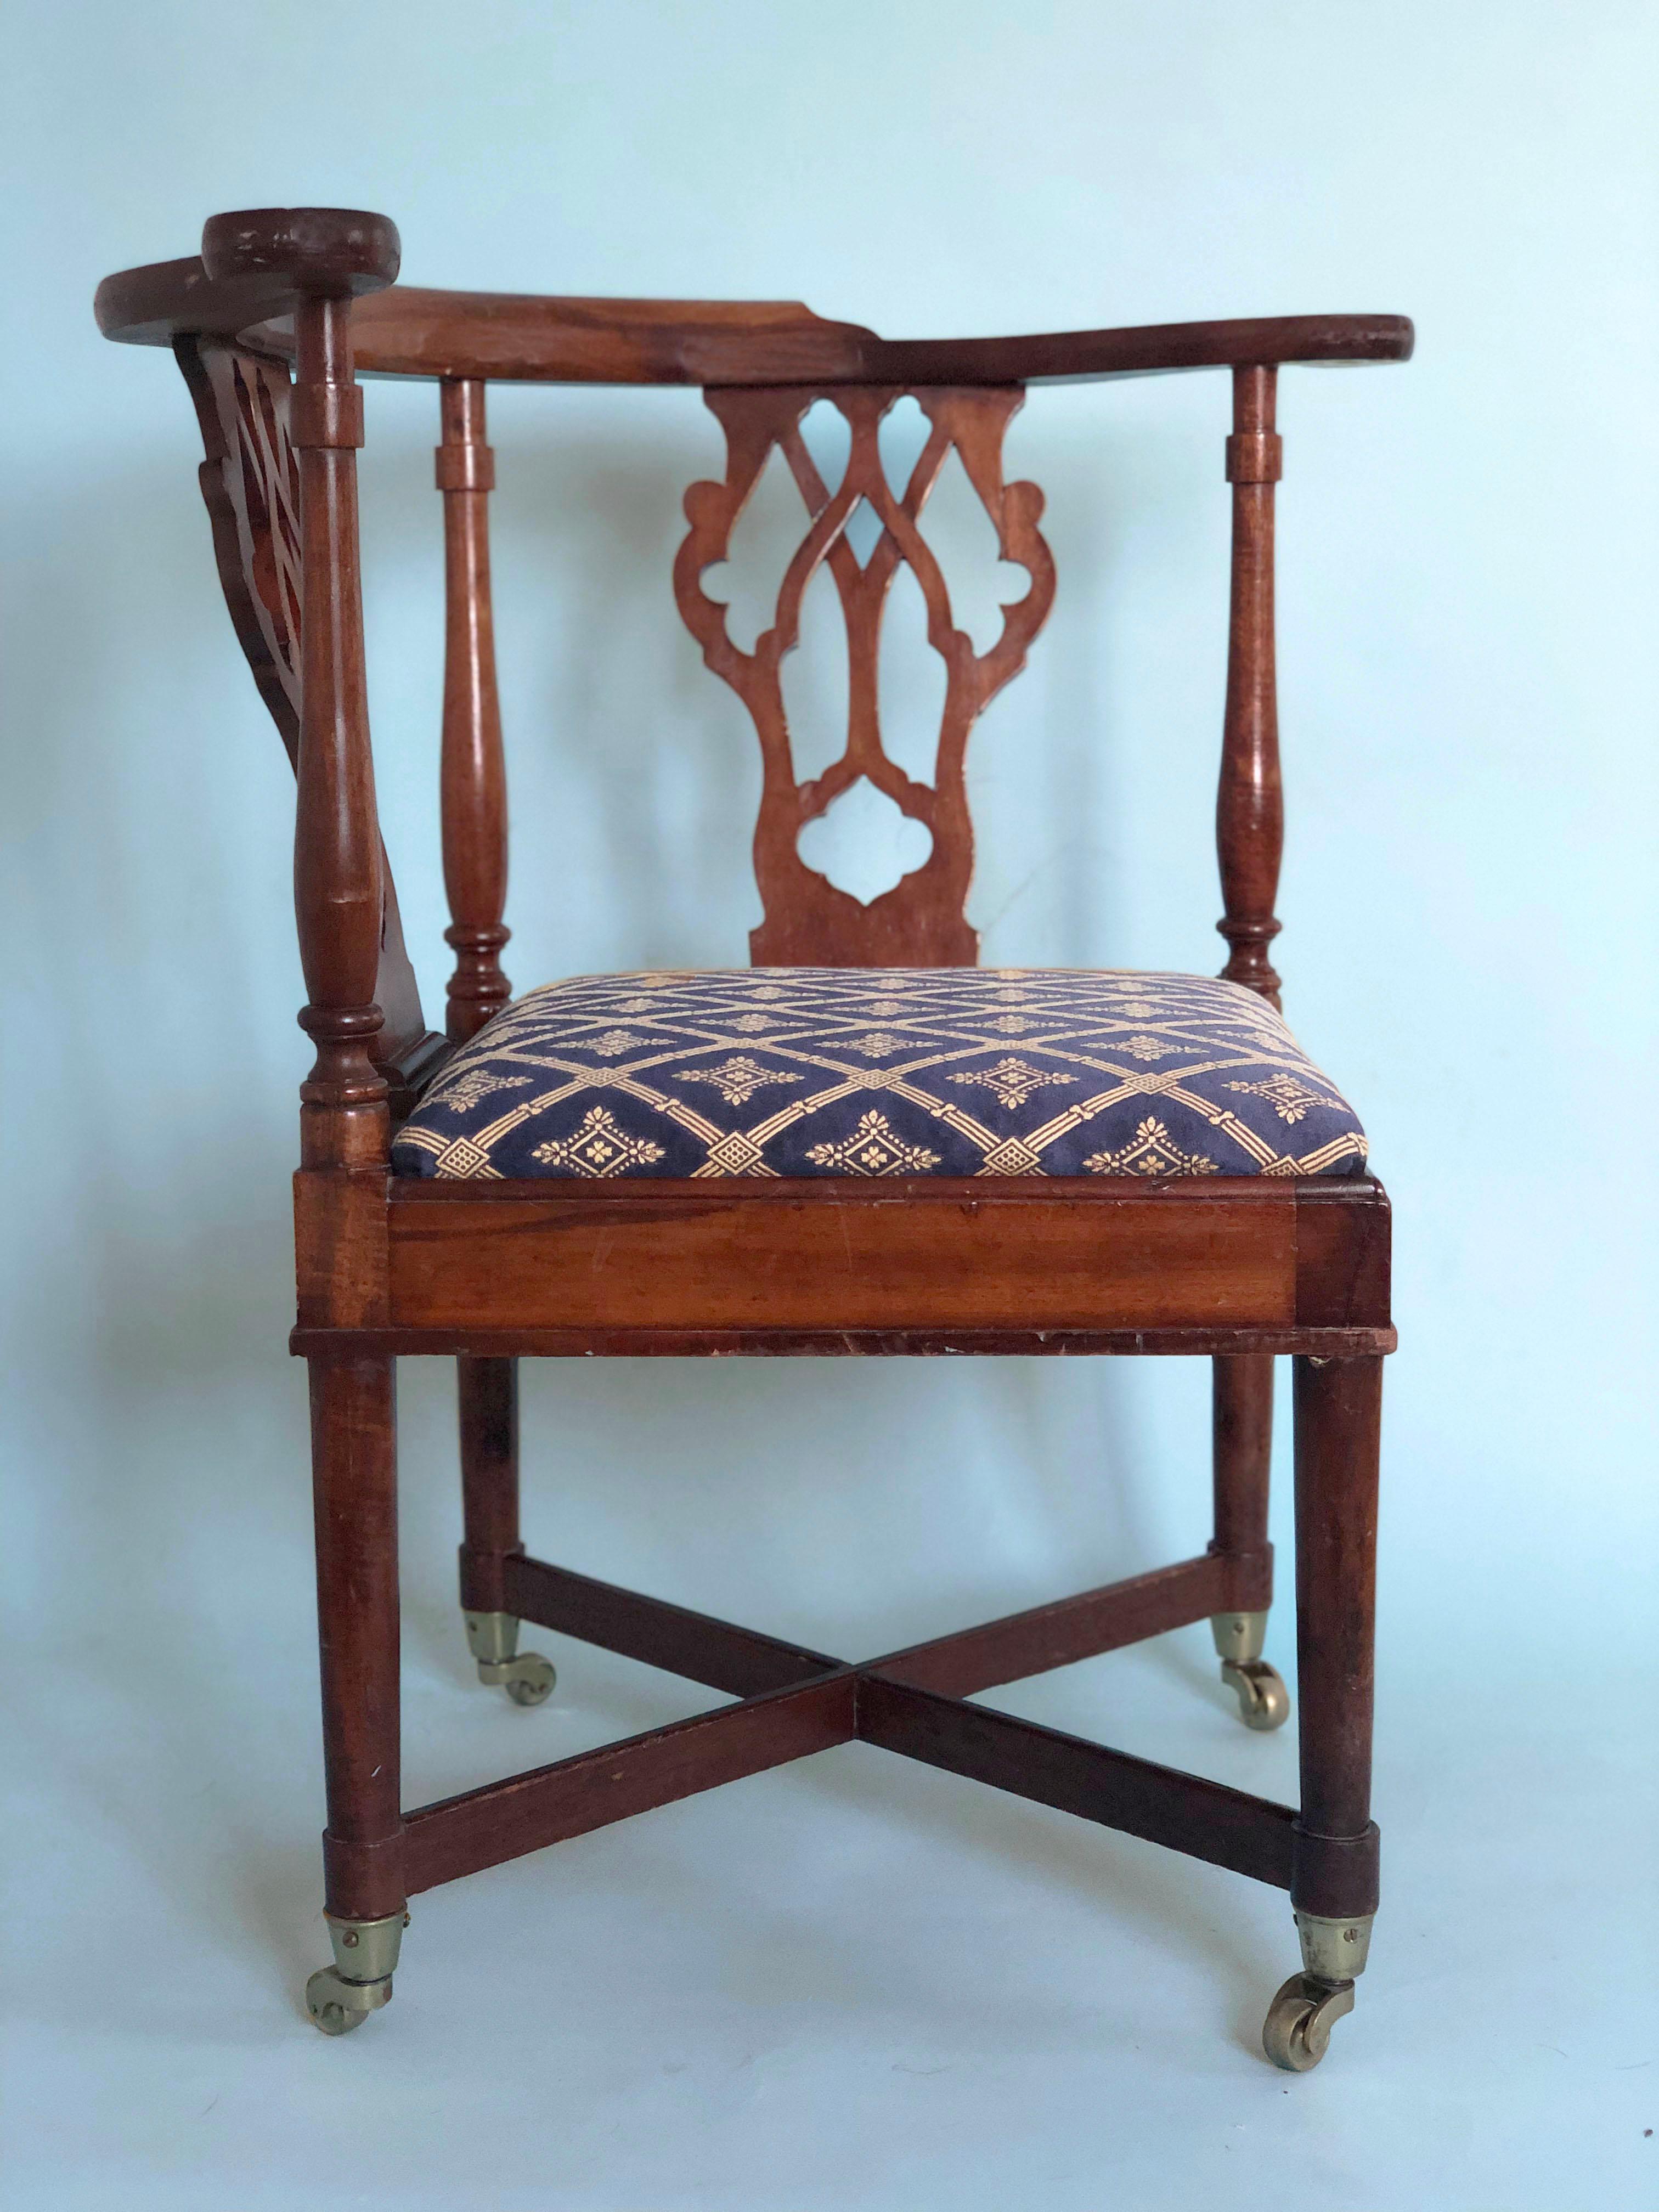 British Georgian Mahogany Corner Chair on Wheels 19th Century For Sale